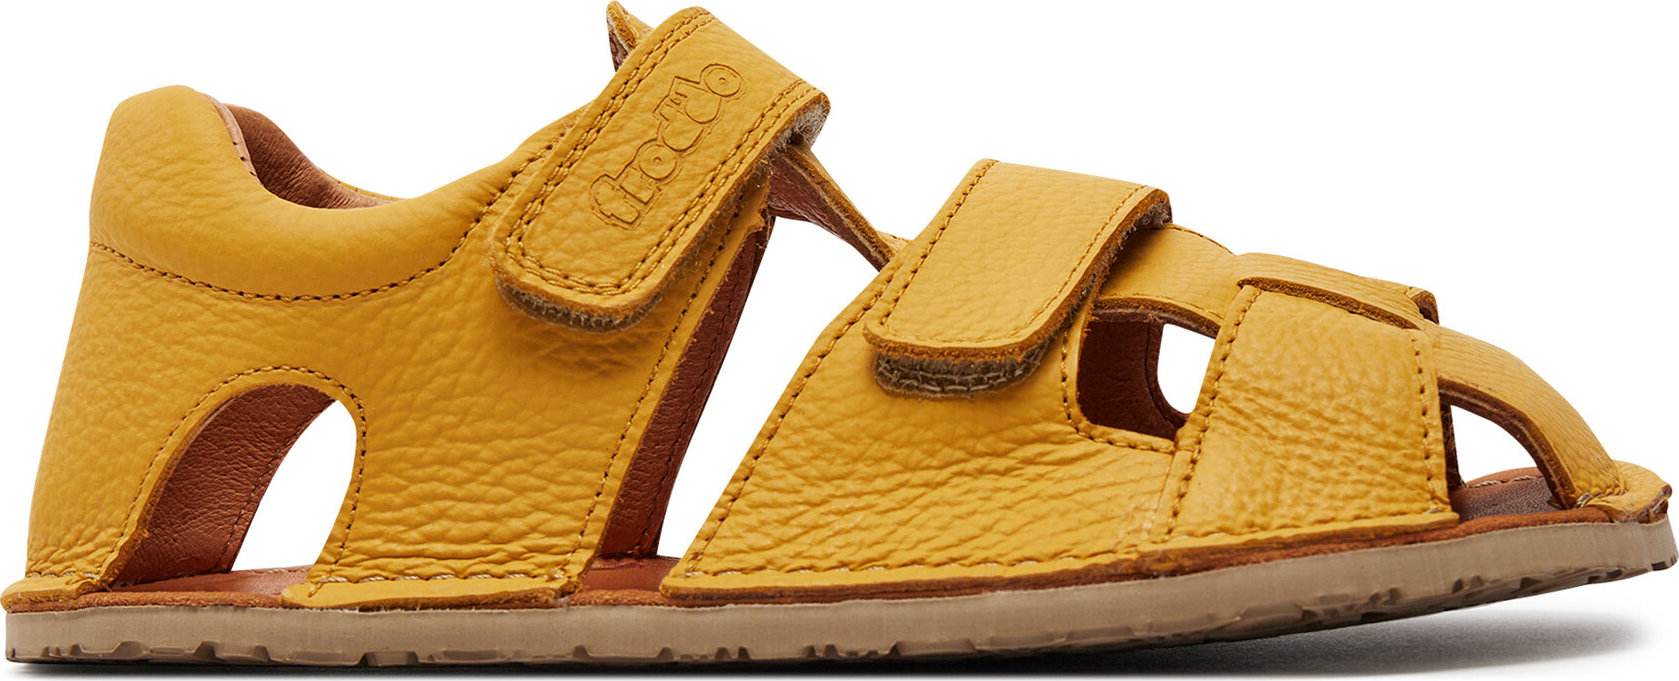 Sandály Froddo Barefoot Flexy Avi G3150263-5 D Yellow